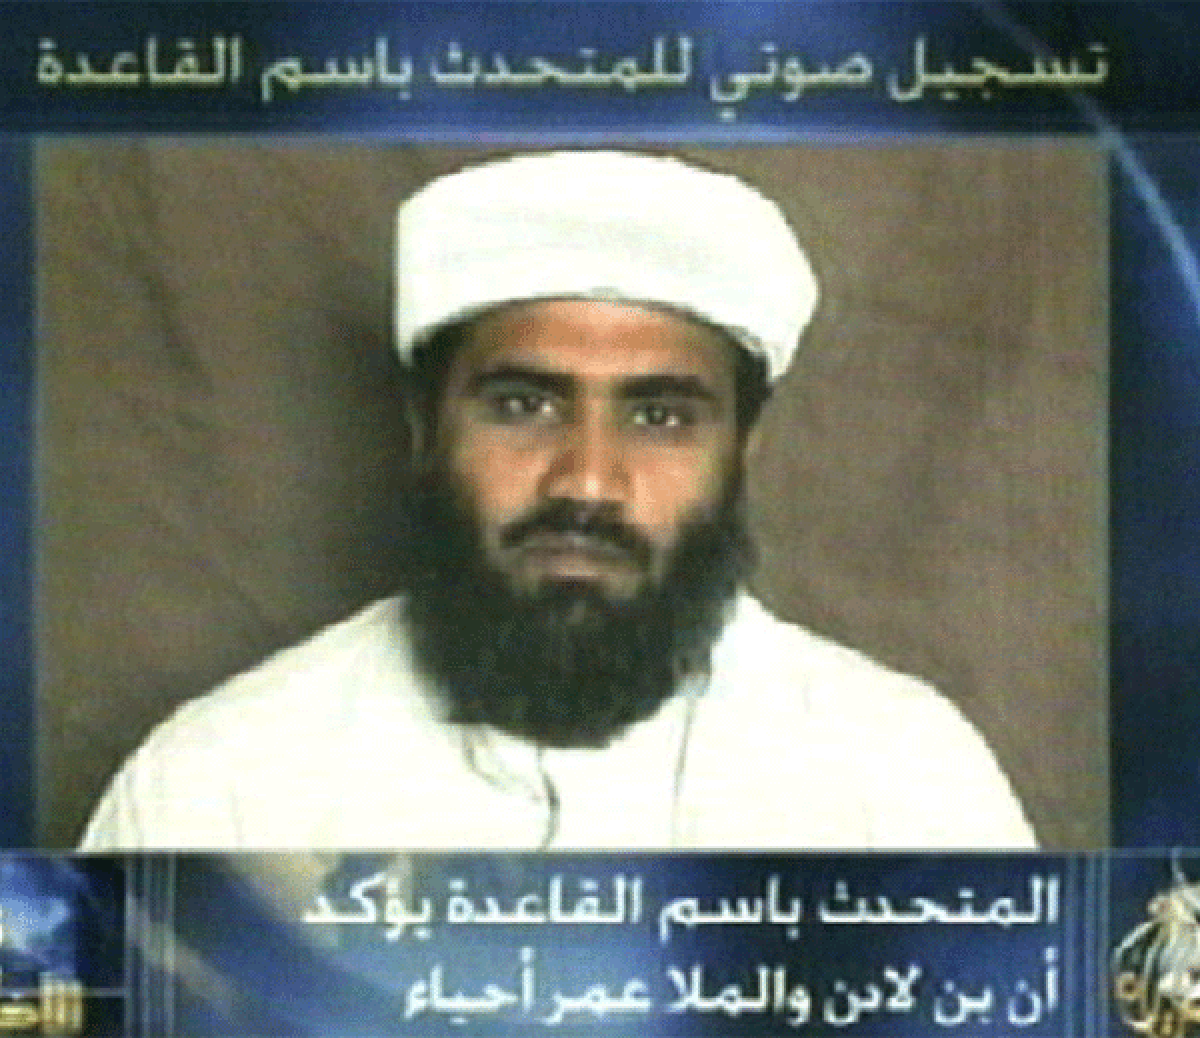 Suspect Sulaiman abu Ghaith, seen in June 2002.